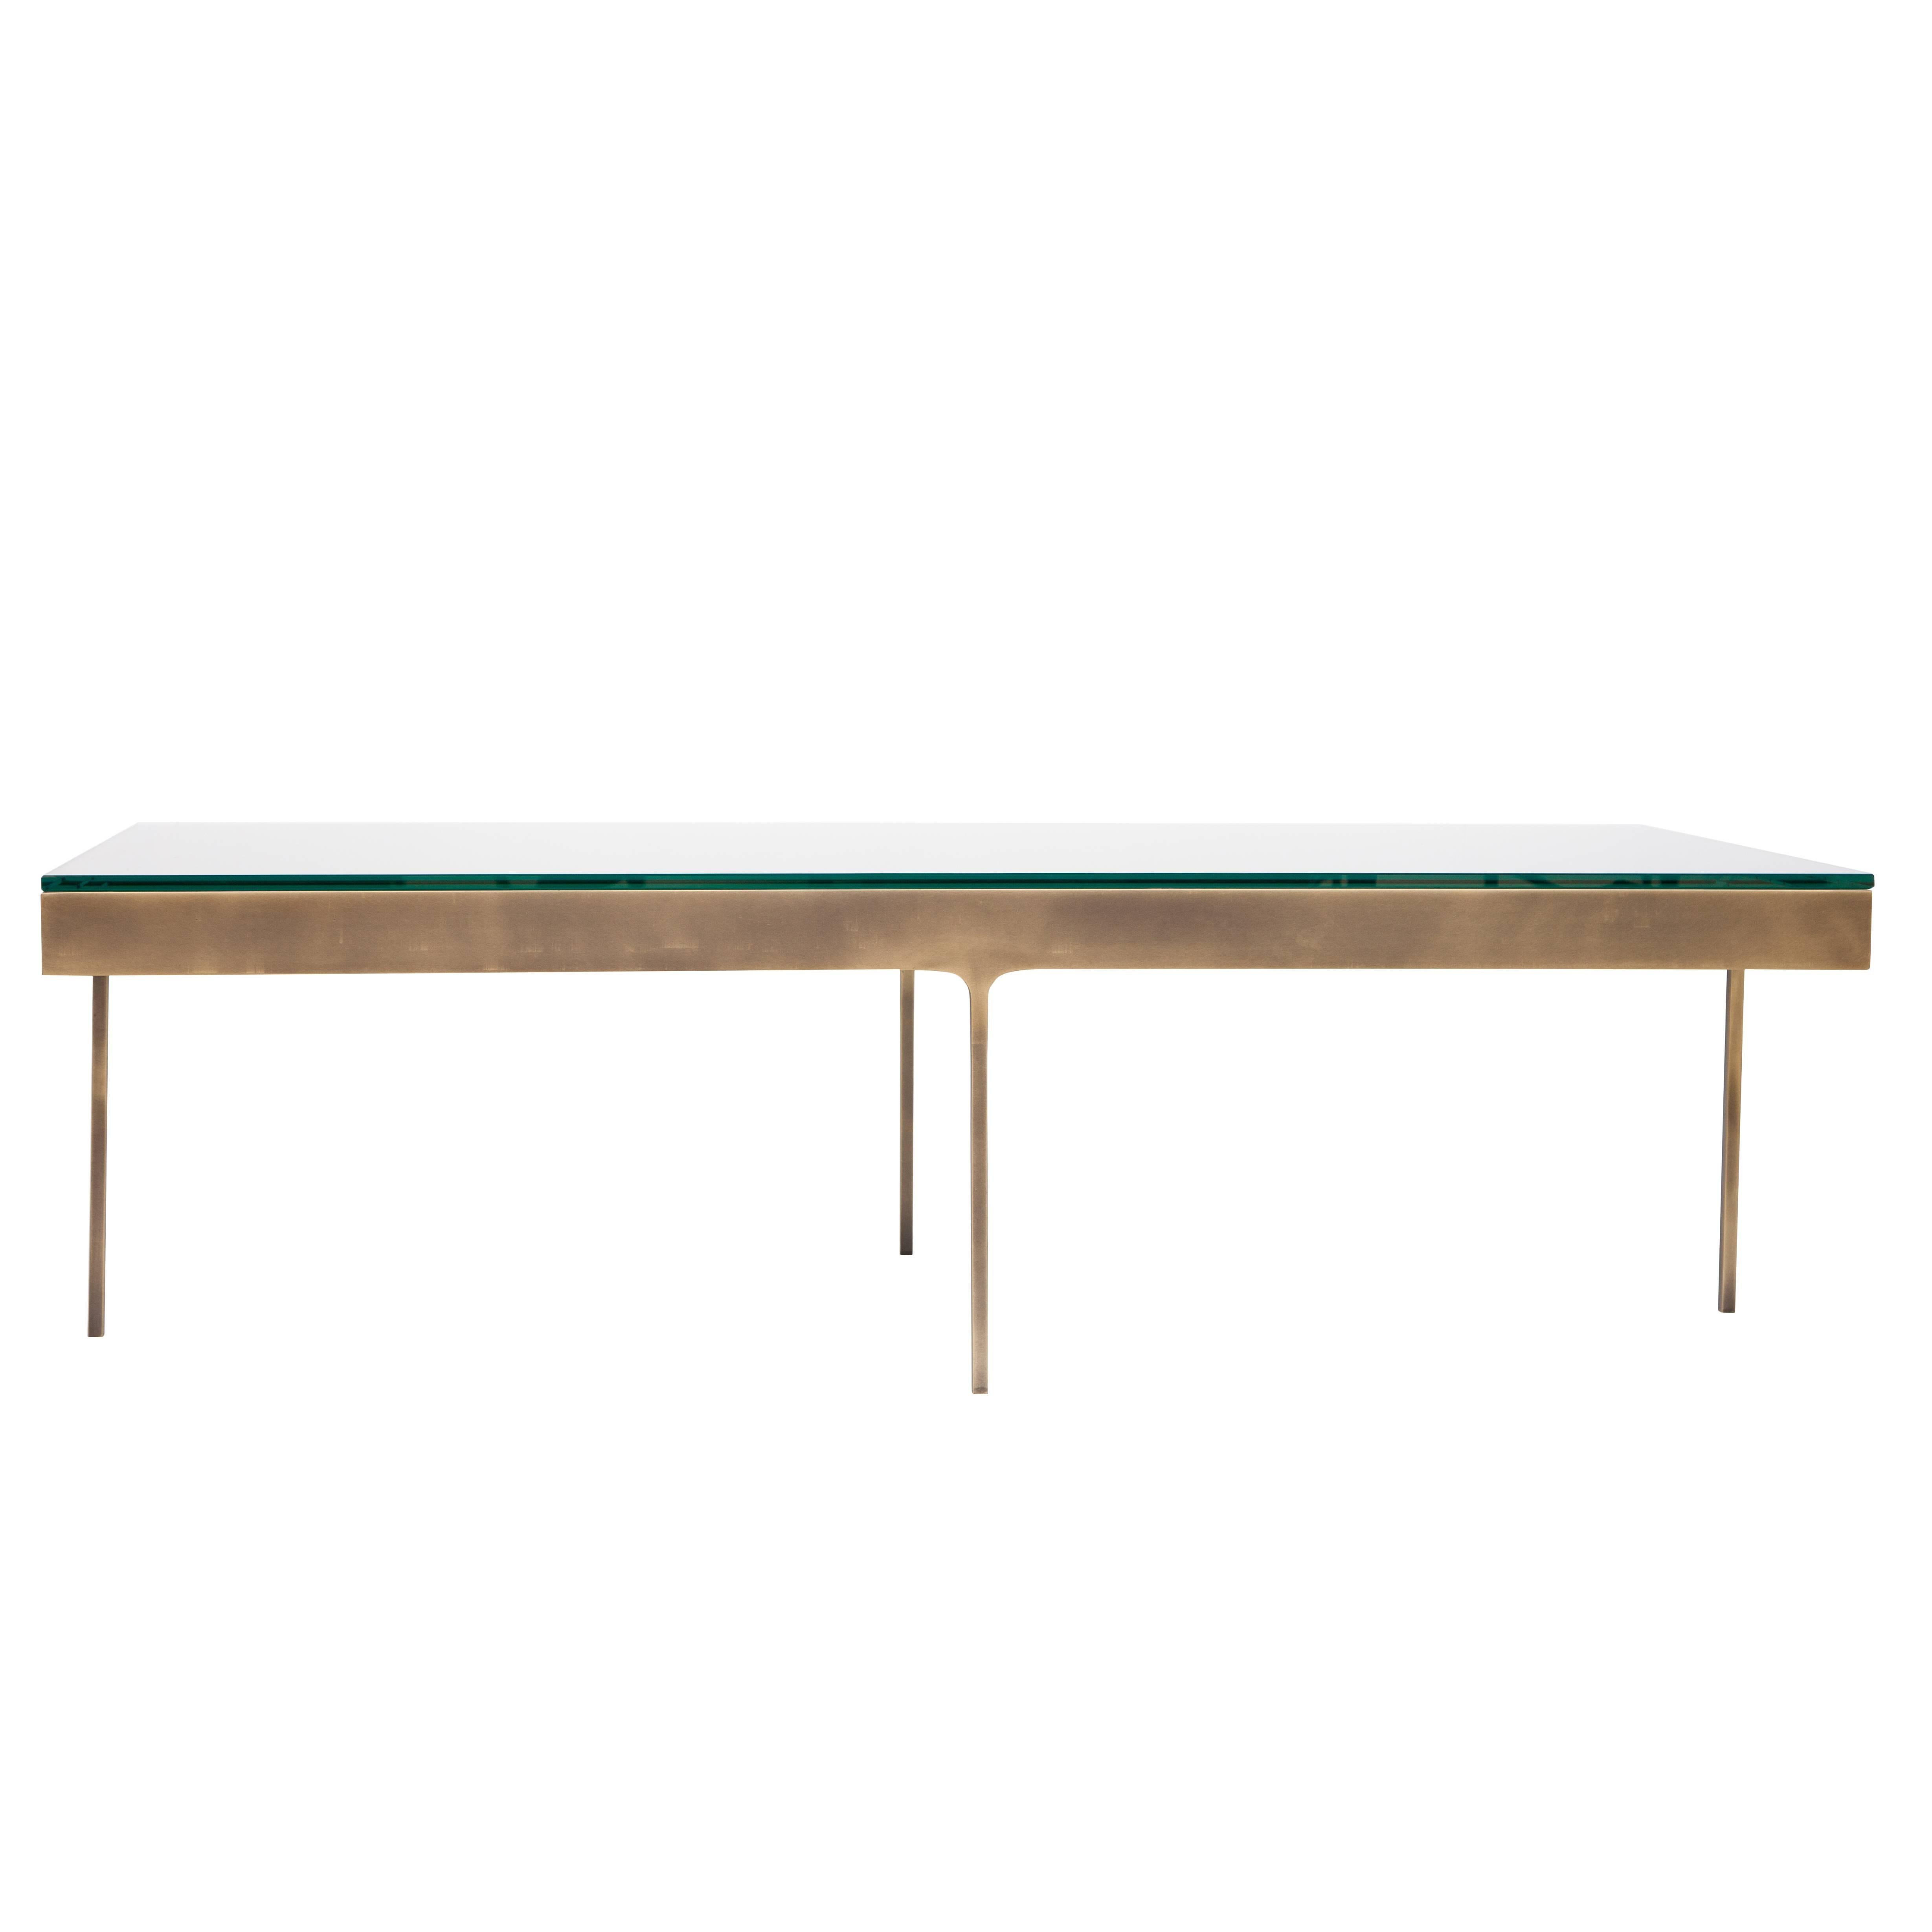 Bronzed Haworth Rectangular Table For Sale